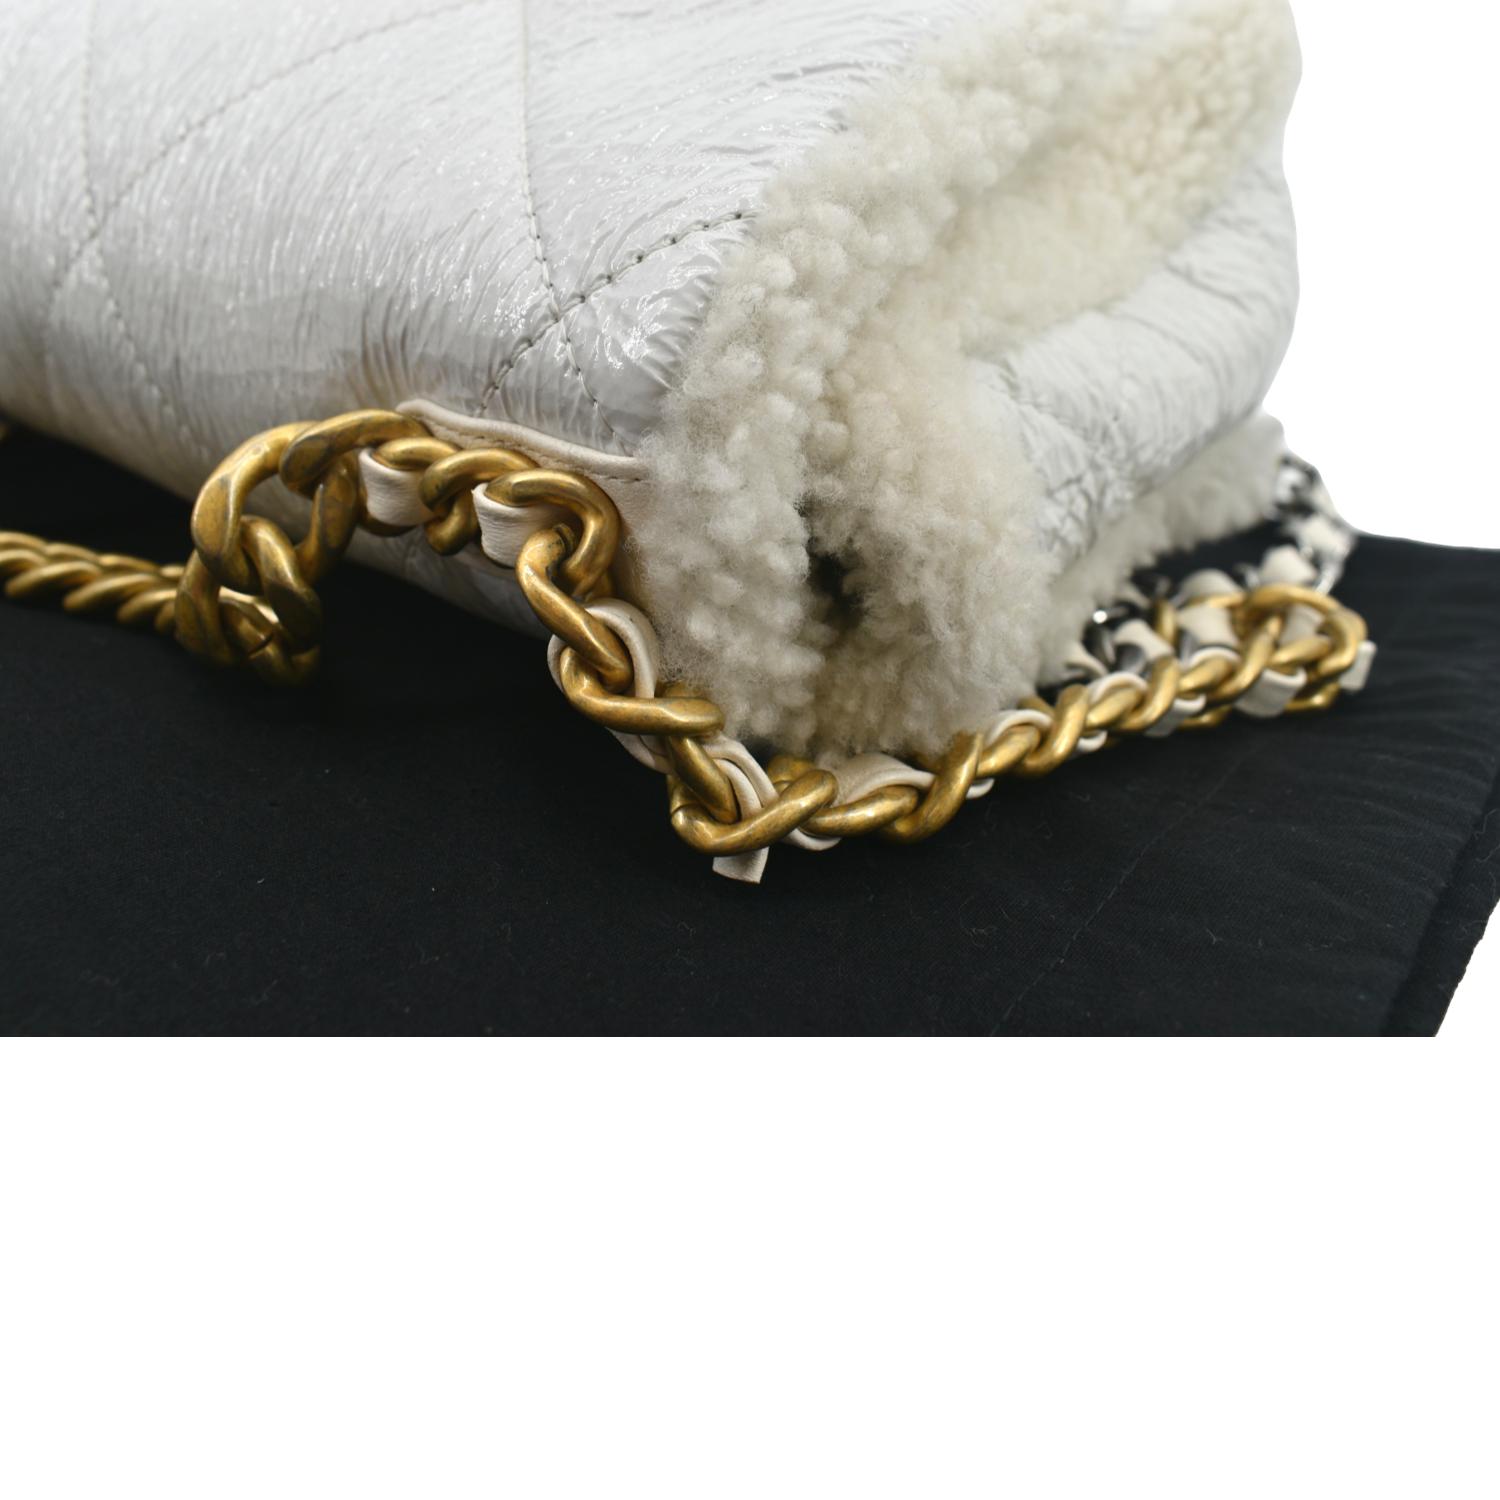 Chanel 19 Flap Shearling Patent Leather Shoulder Bag